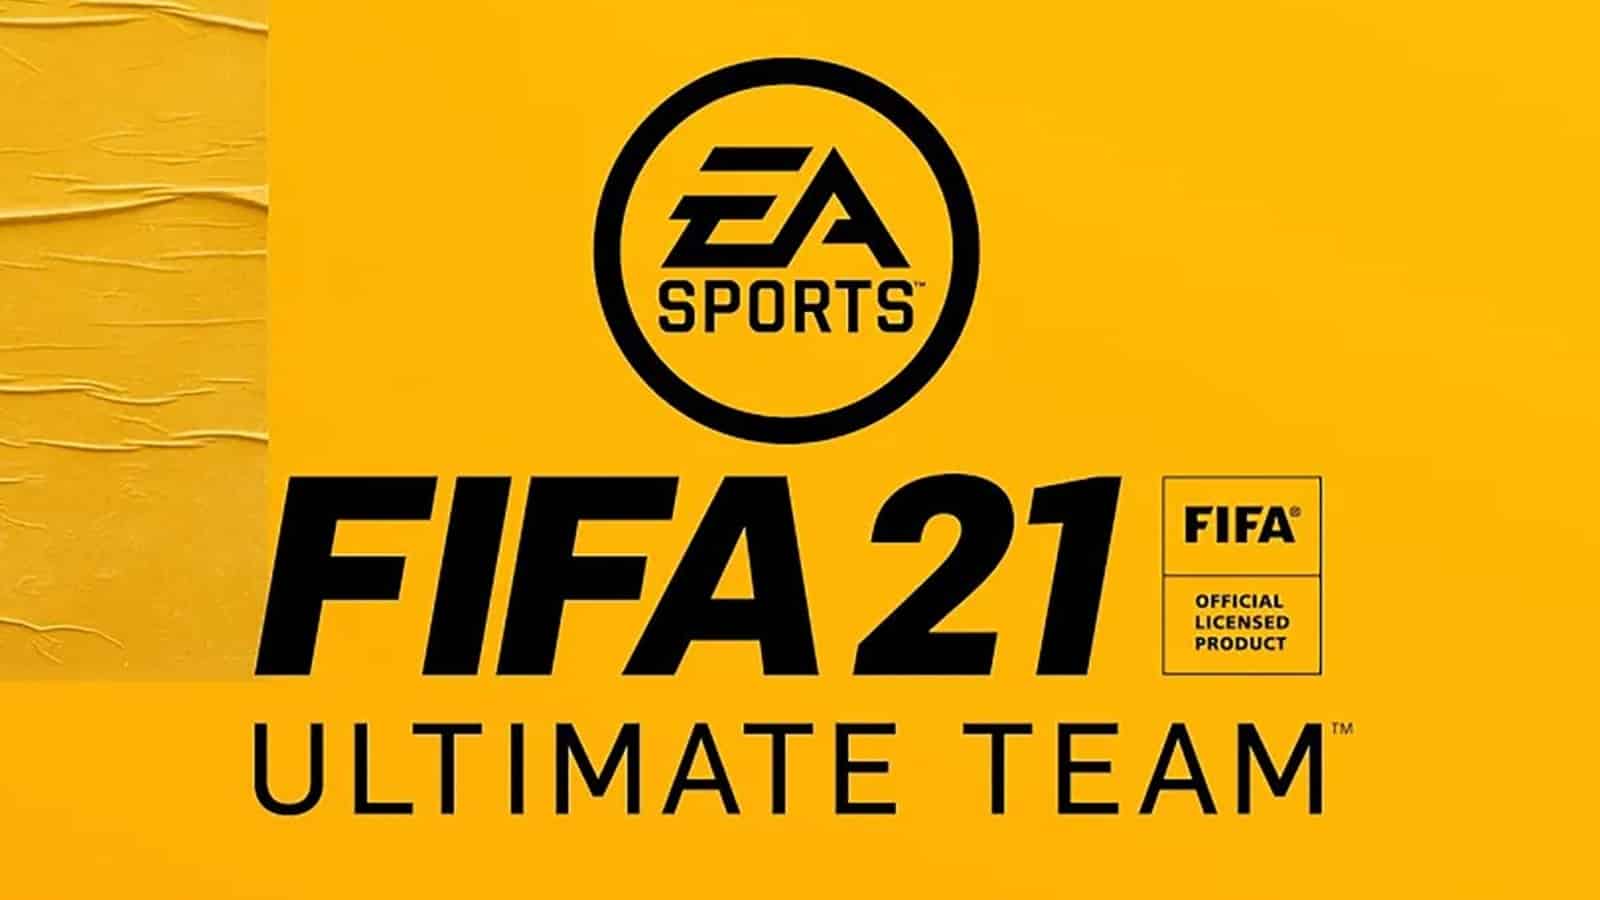 EA SPORTS FIFA 21 Ultimate Team statement